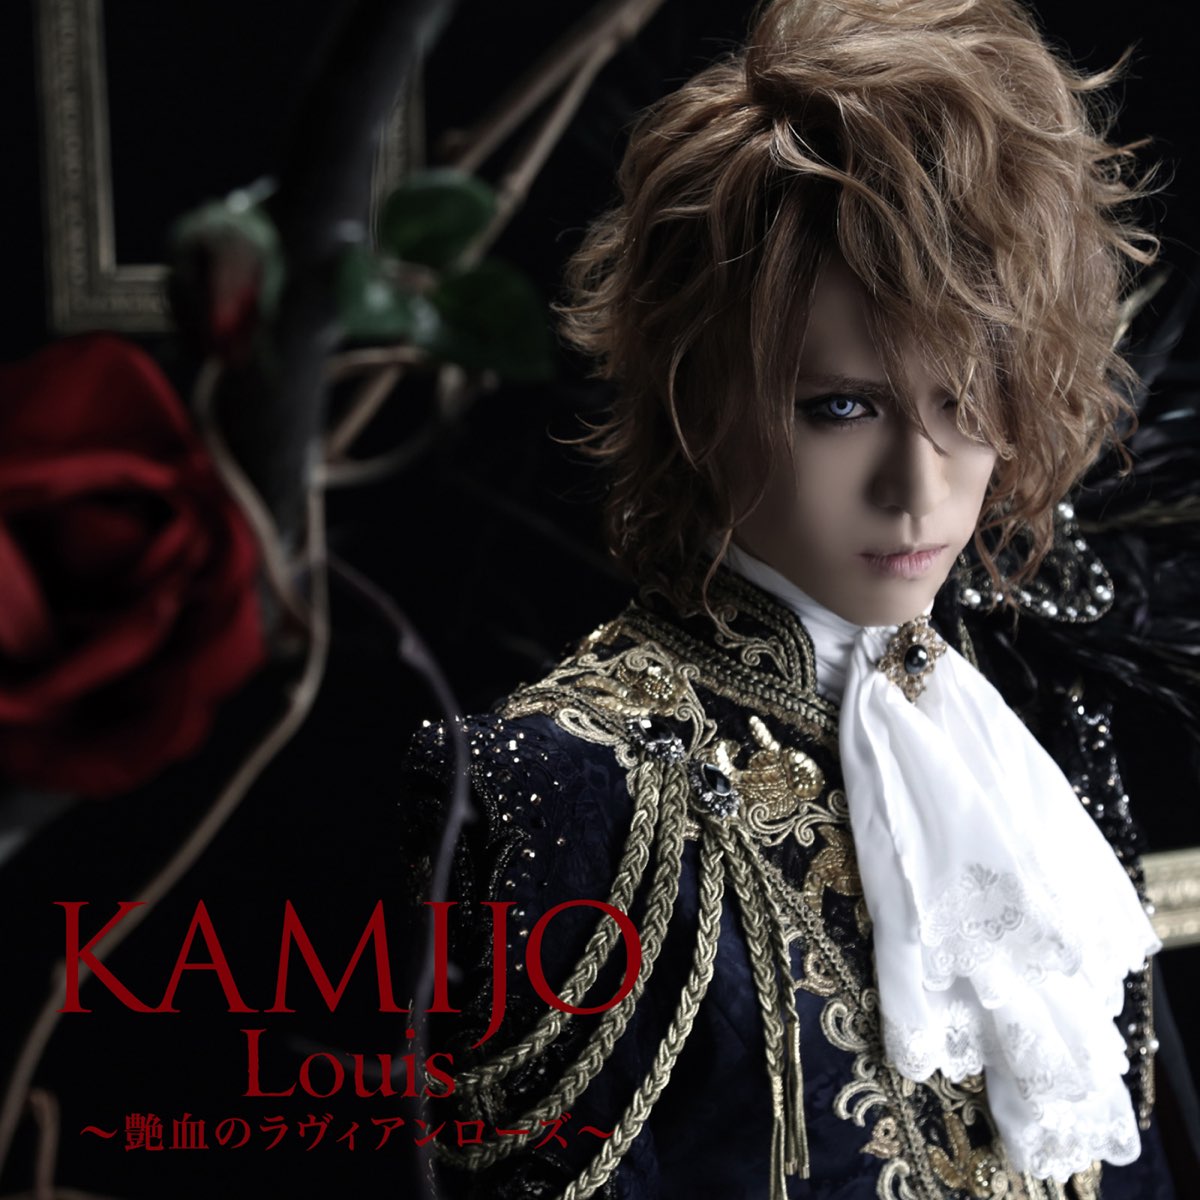 Louis Enketsu No La Vie En Rose Single By Kamijo On Apple Music